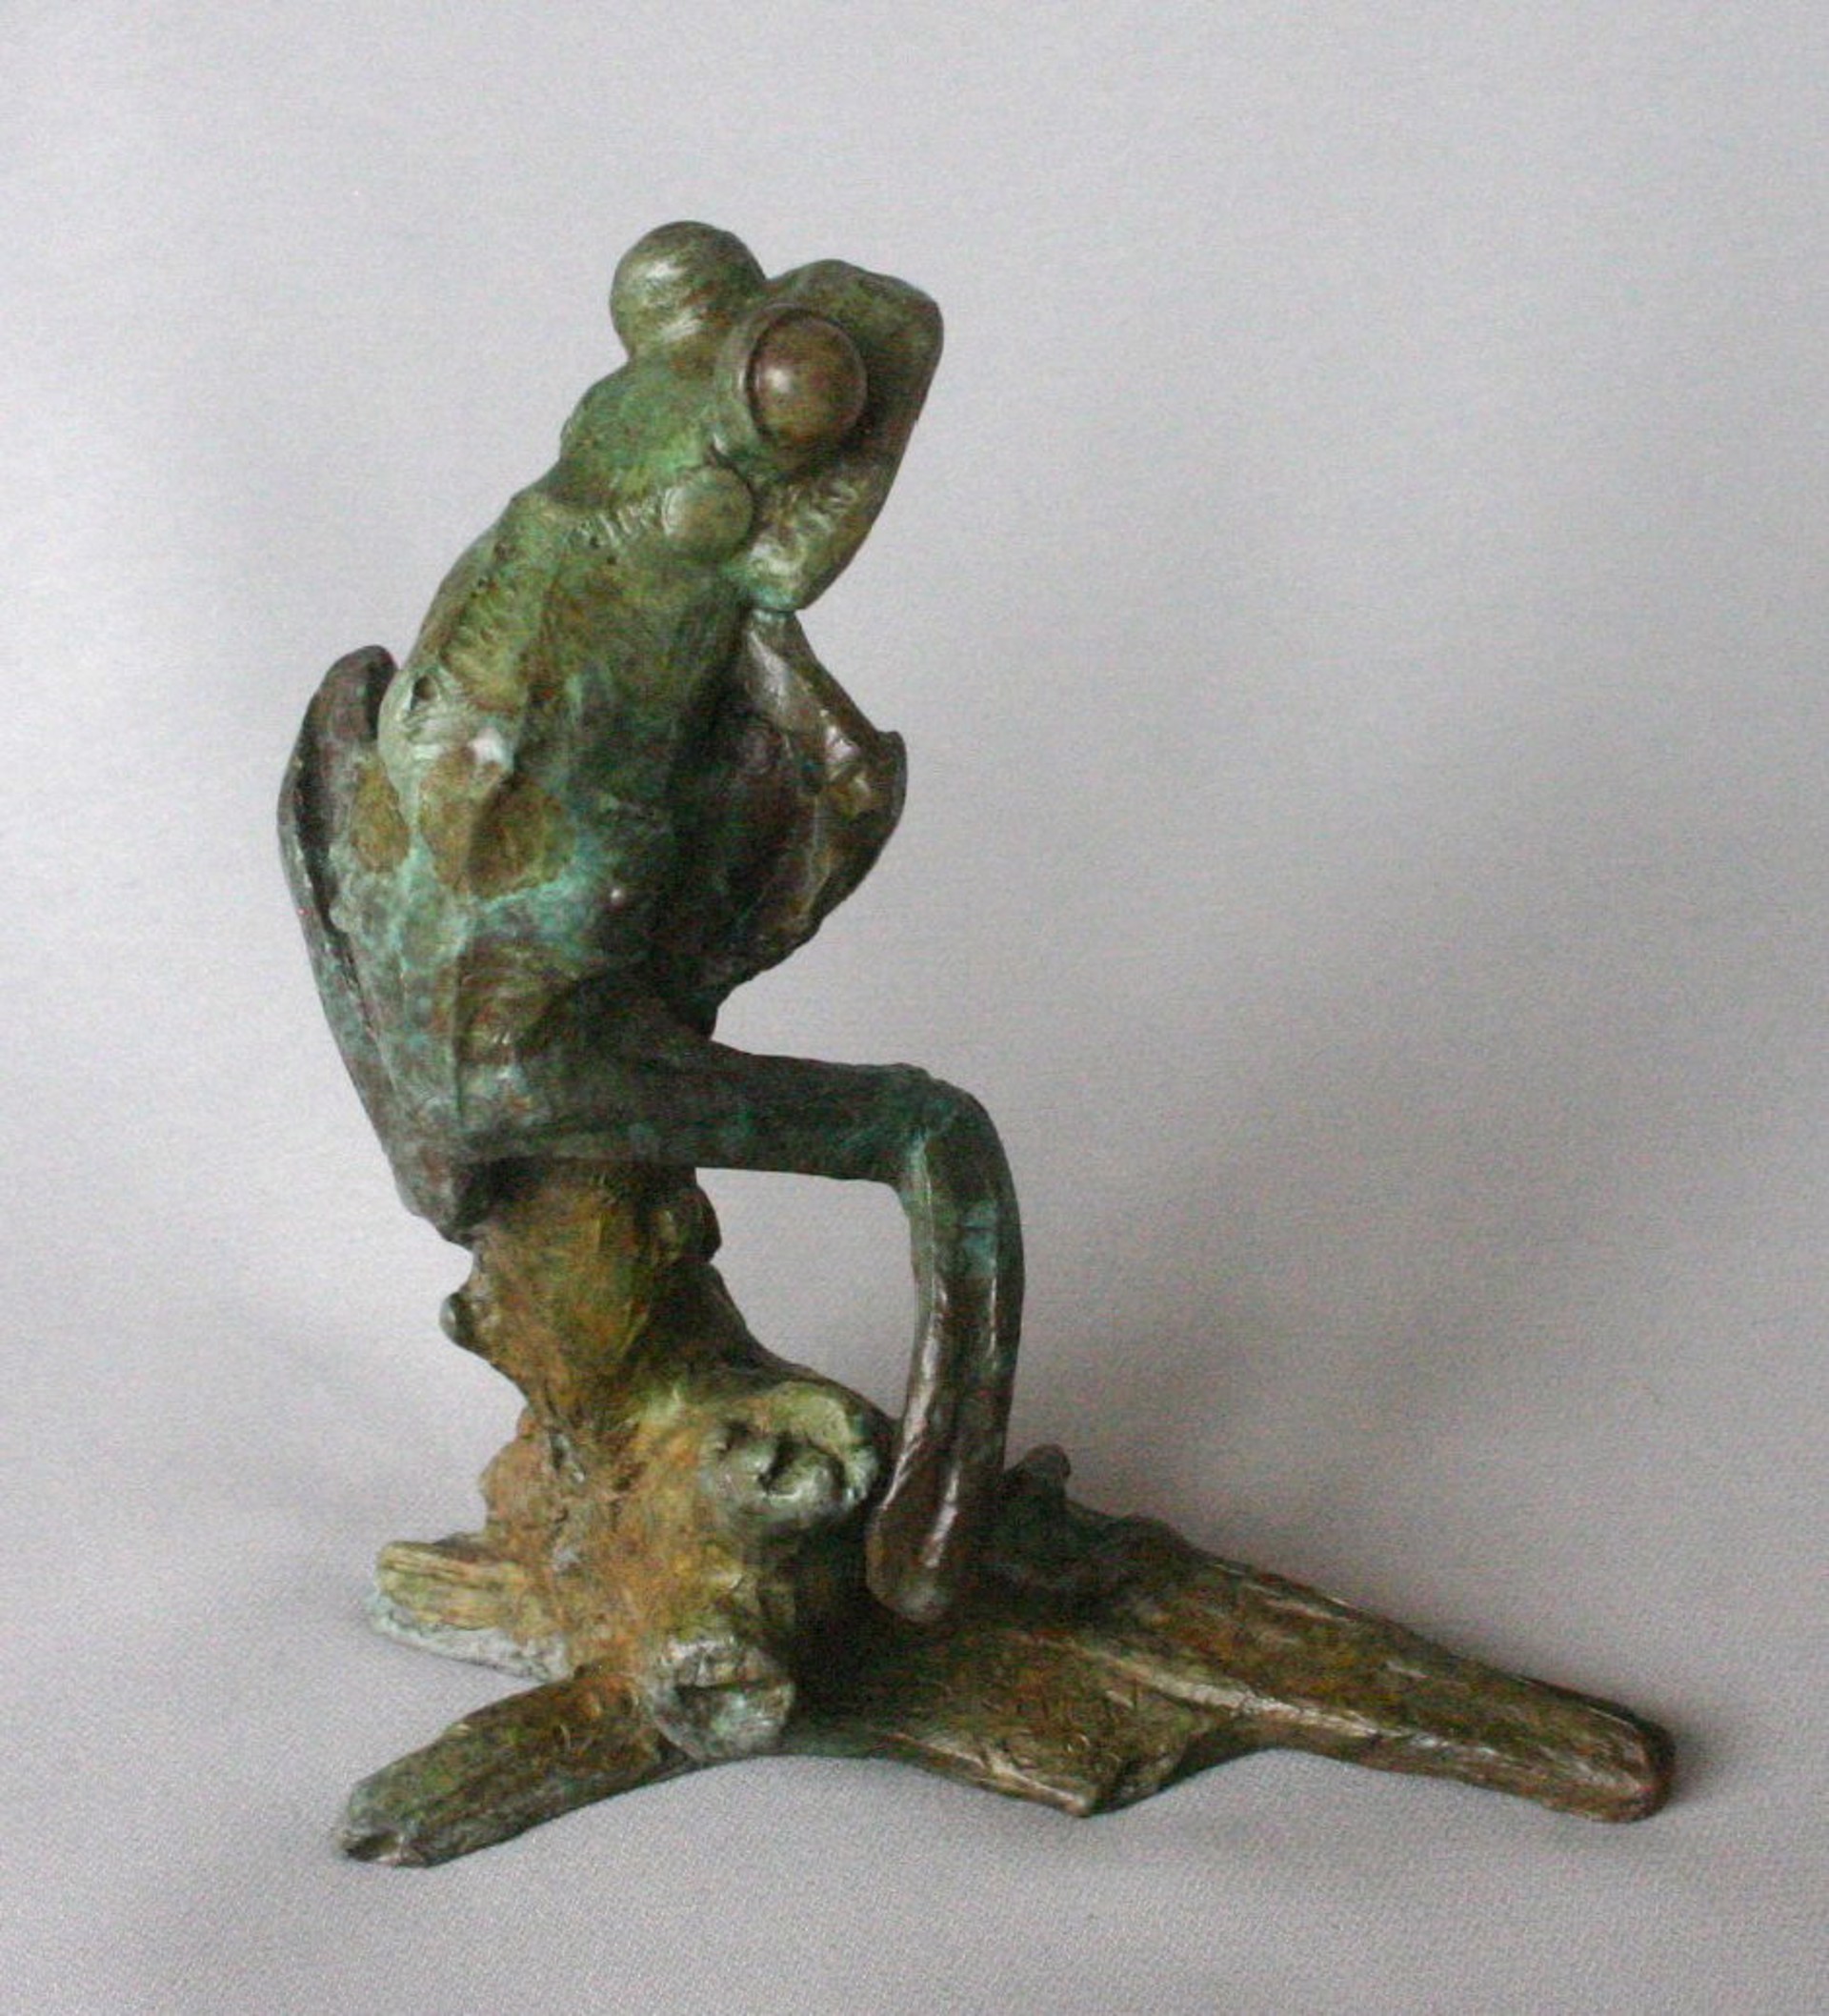 Tree Frog B by Dan Chen